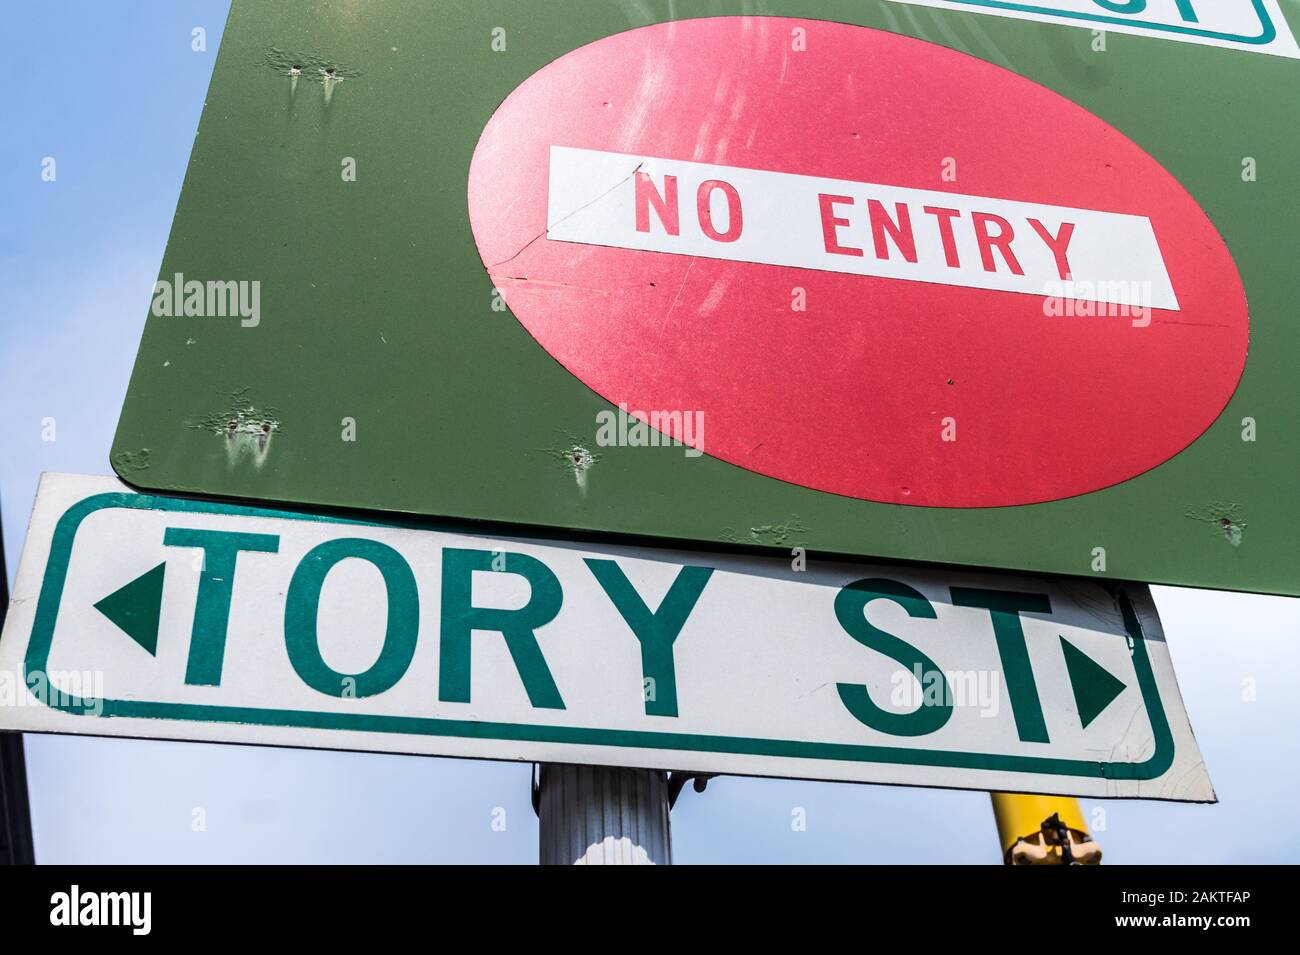 'No Entry' street sign, Tory Street, Te Aro, Wellington, New Zealand Stock Photo